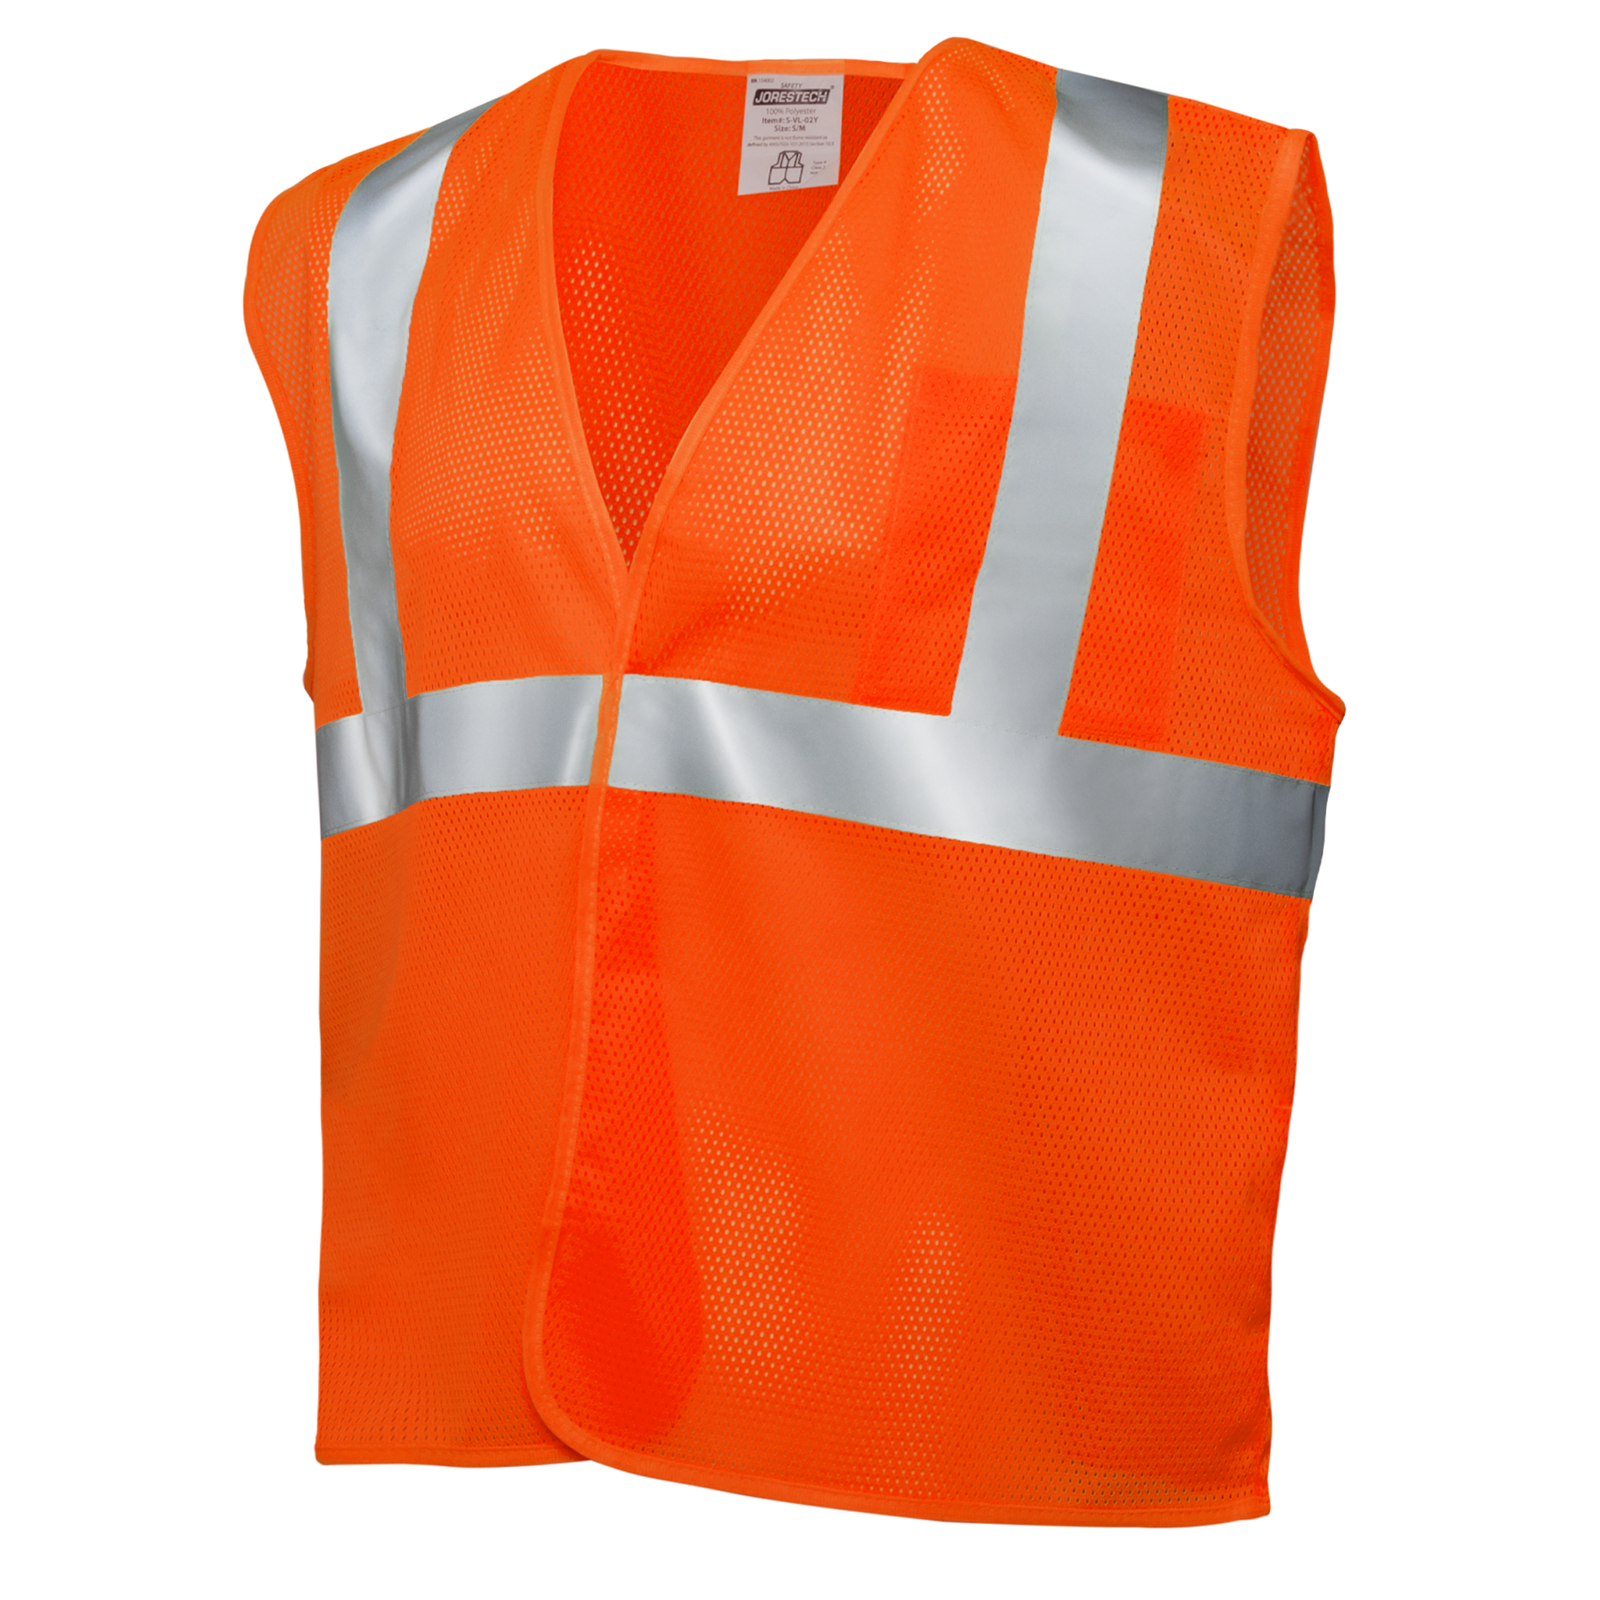 Orange hi visibility safety vest ANSI/ISEA 107-2015, Type R Class 2